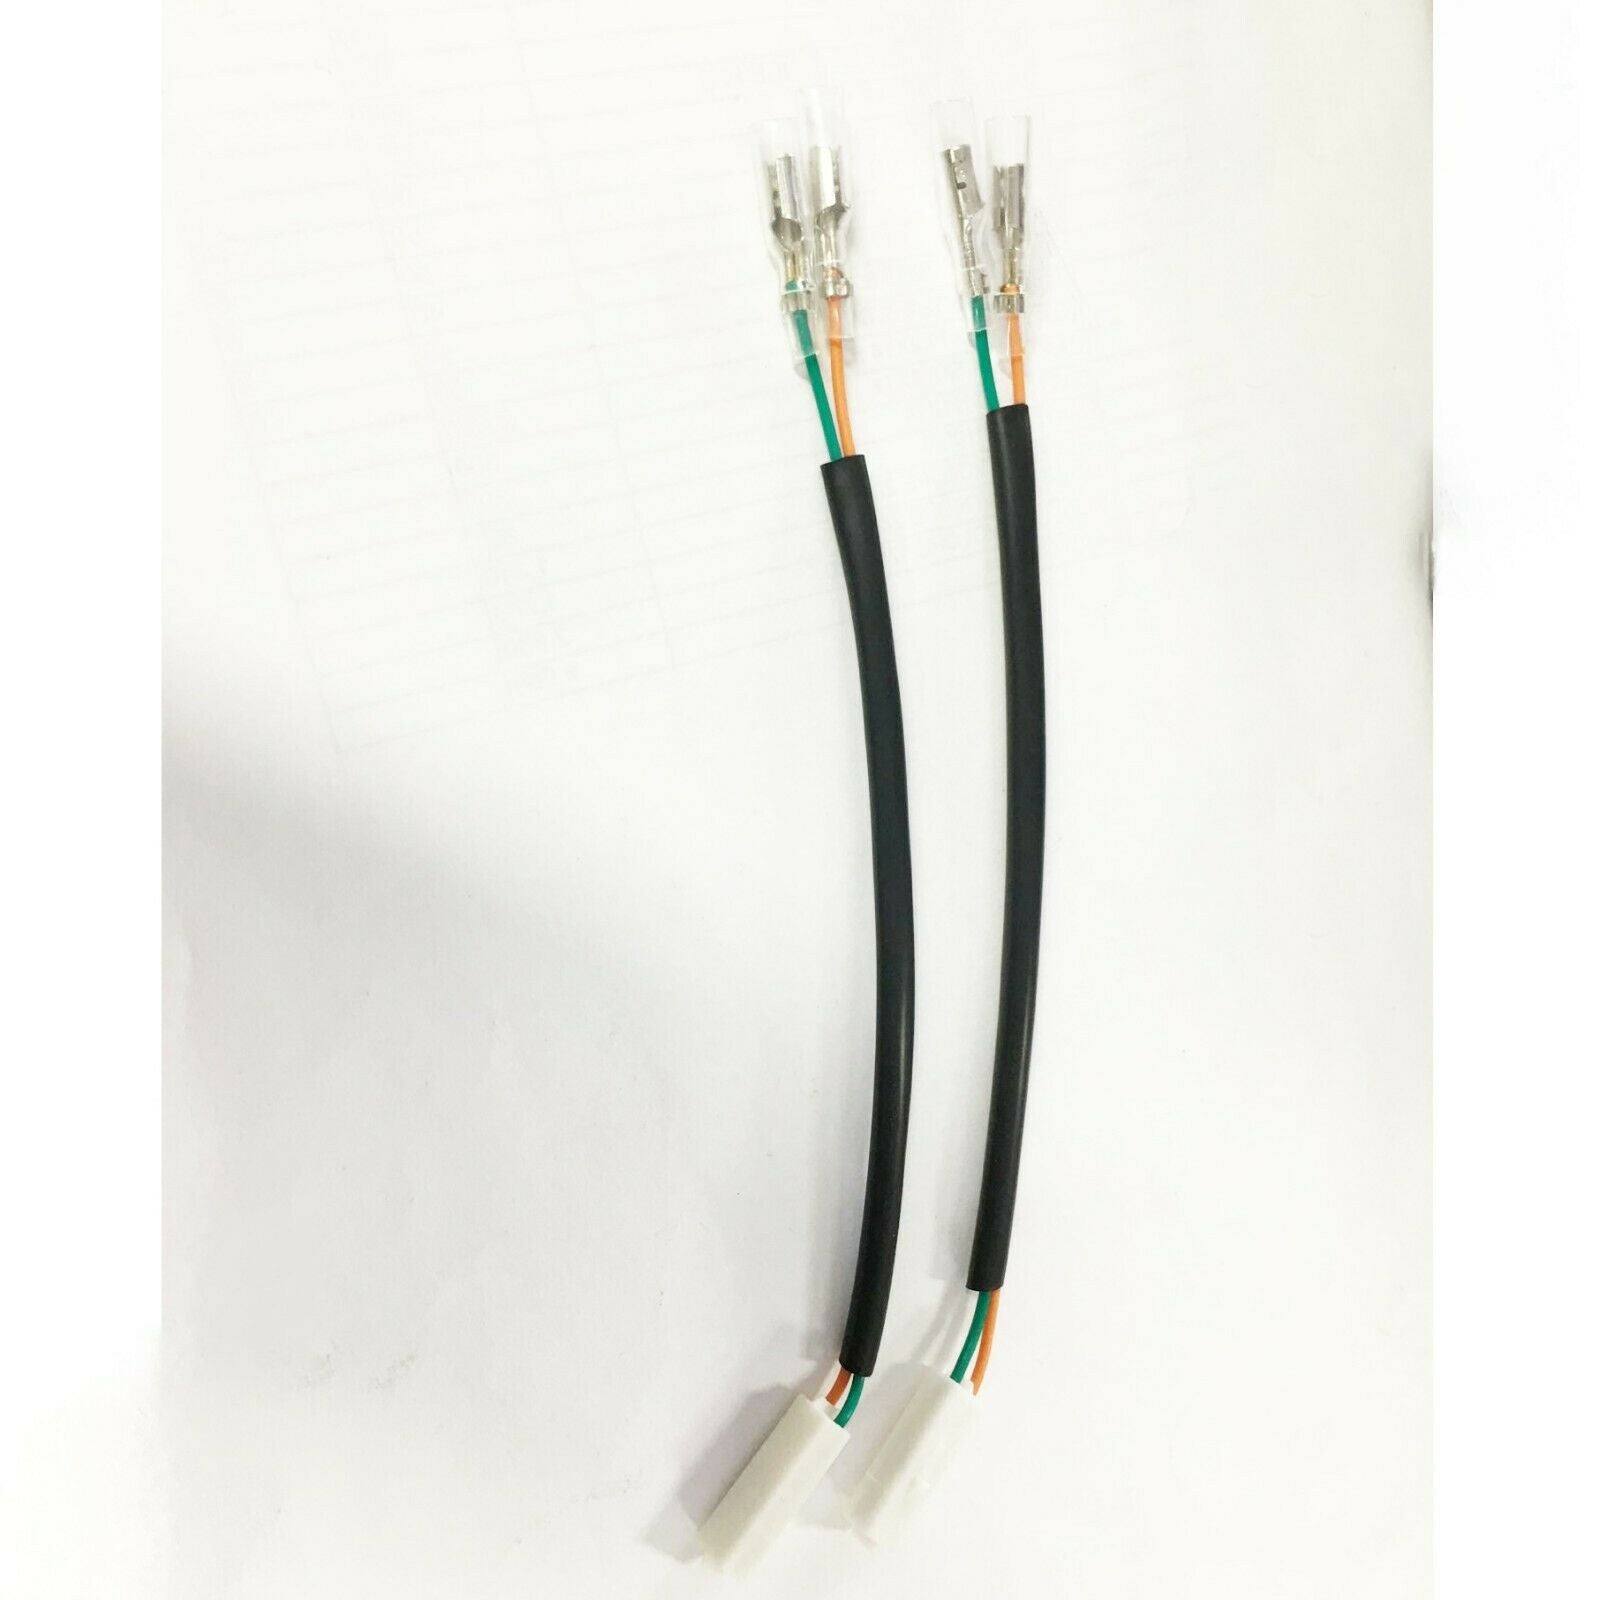 2x Motorcycle Indicator Wire Adapter Plug Connector For Kawasaki Motorcycles - TDRMOTO